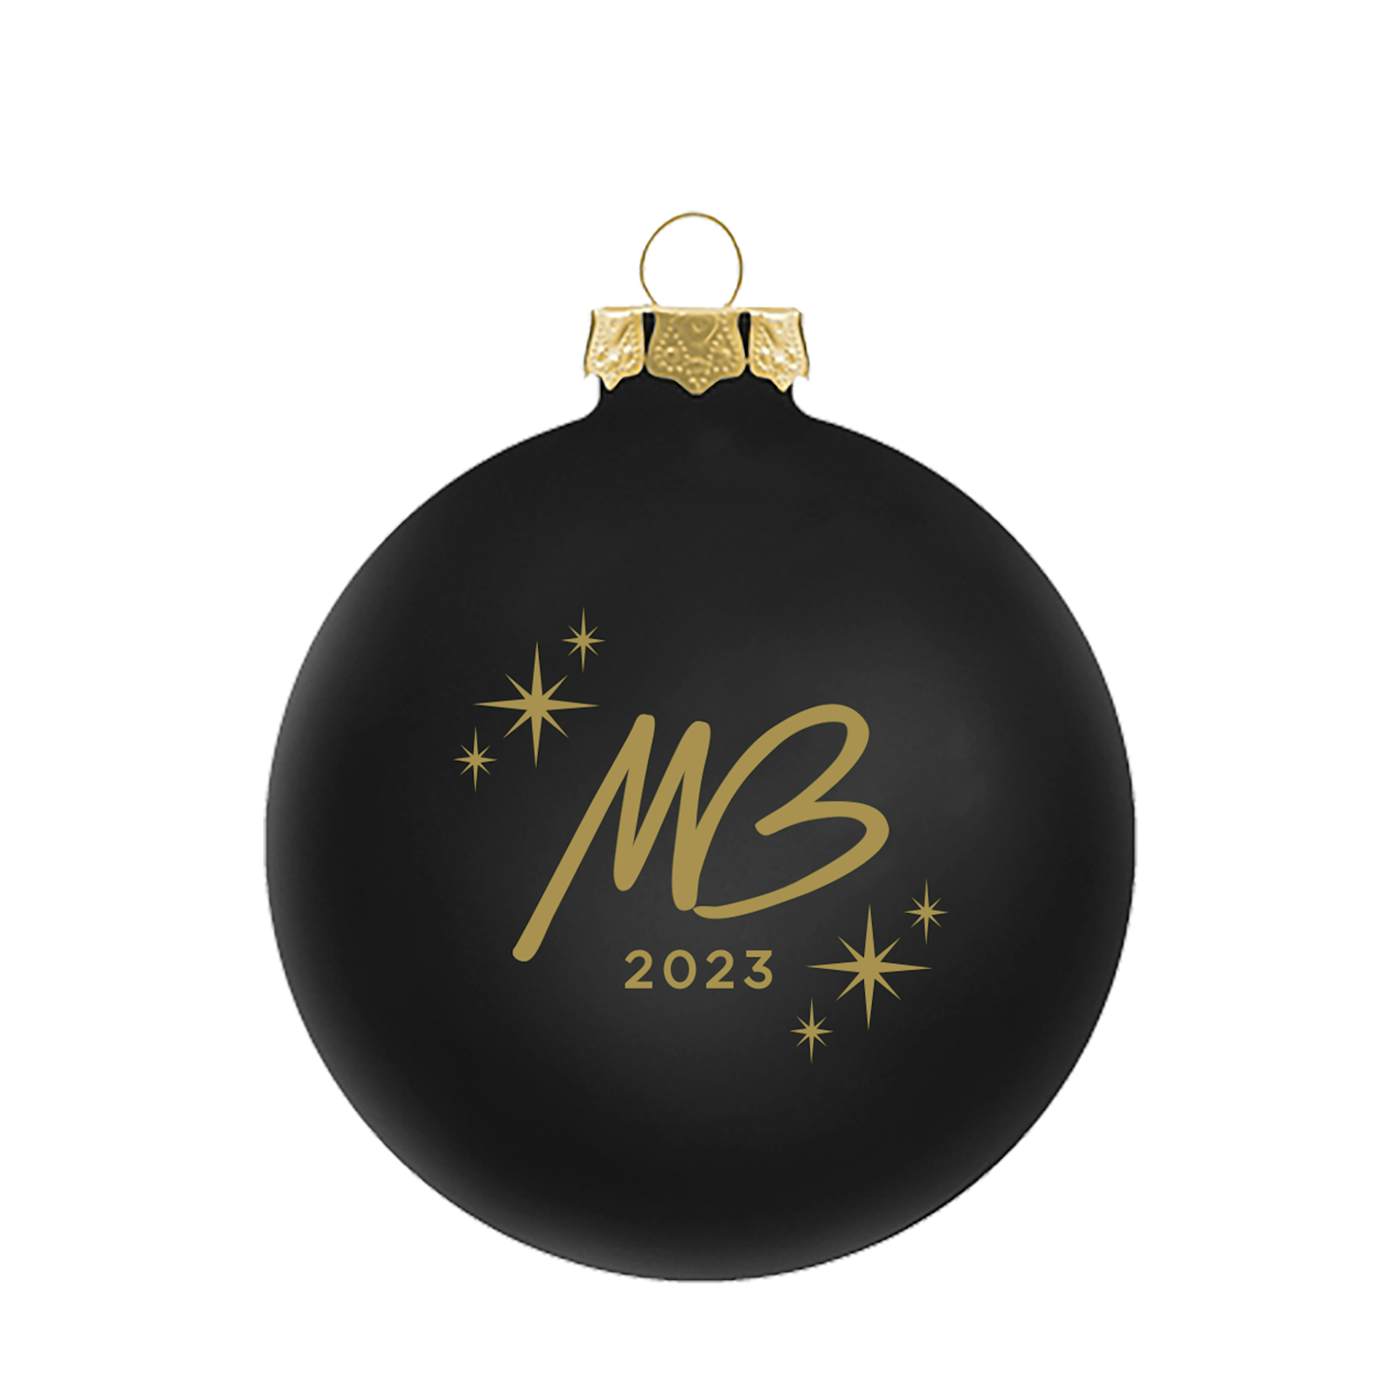 Michael Bublé 2023 Initials Christmas Ornament